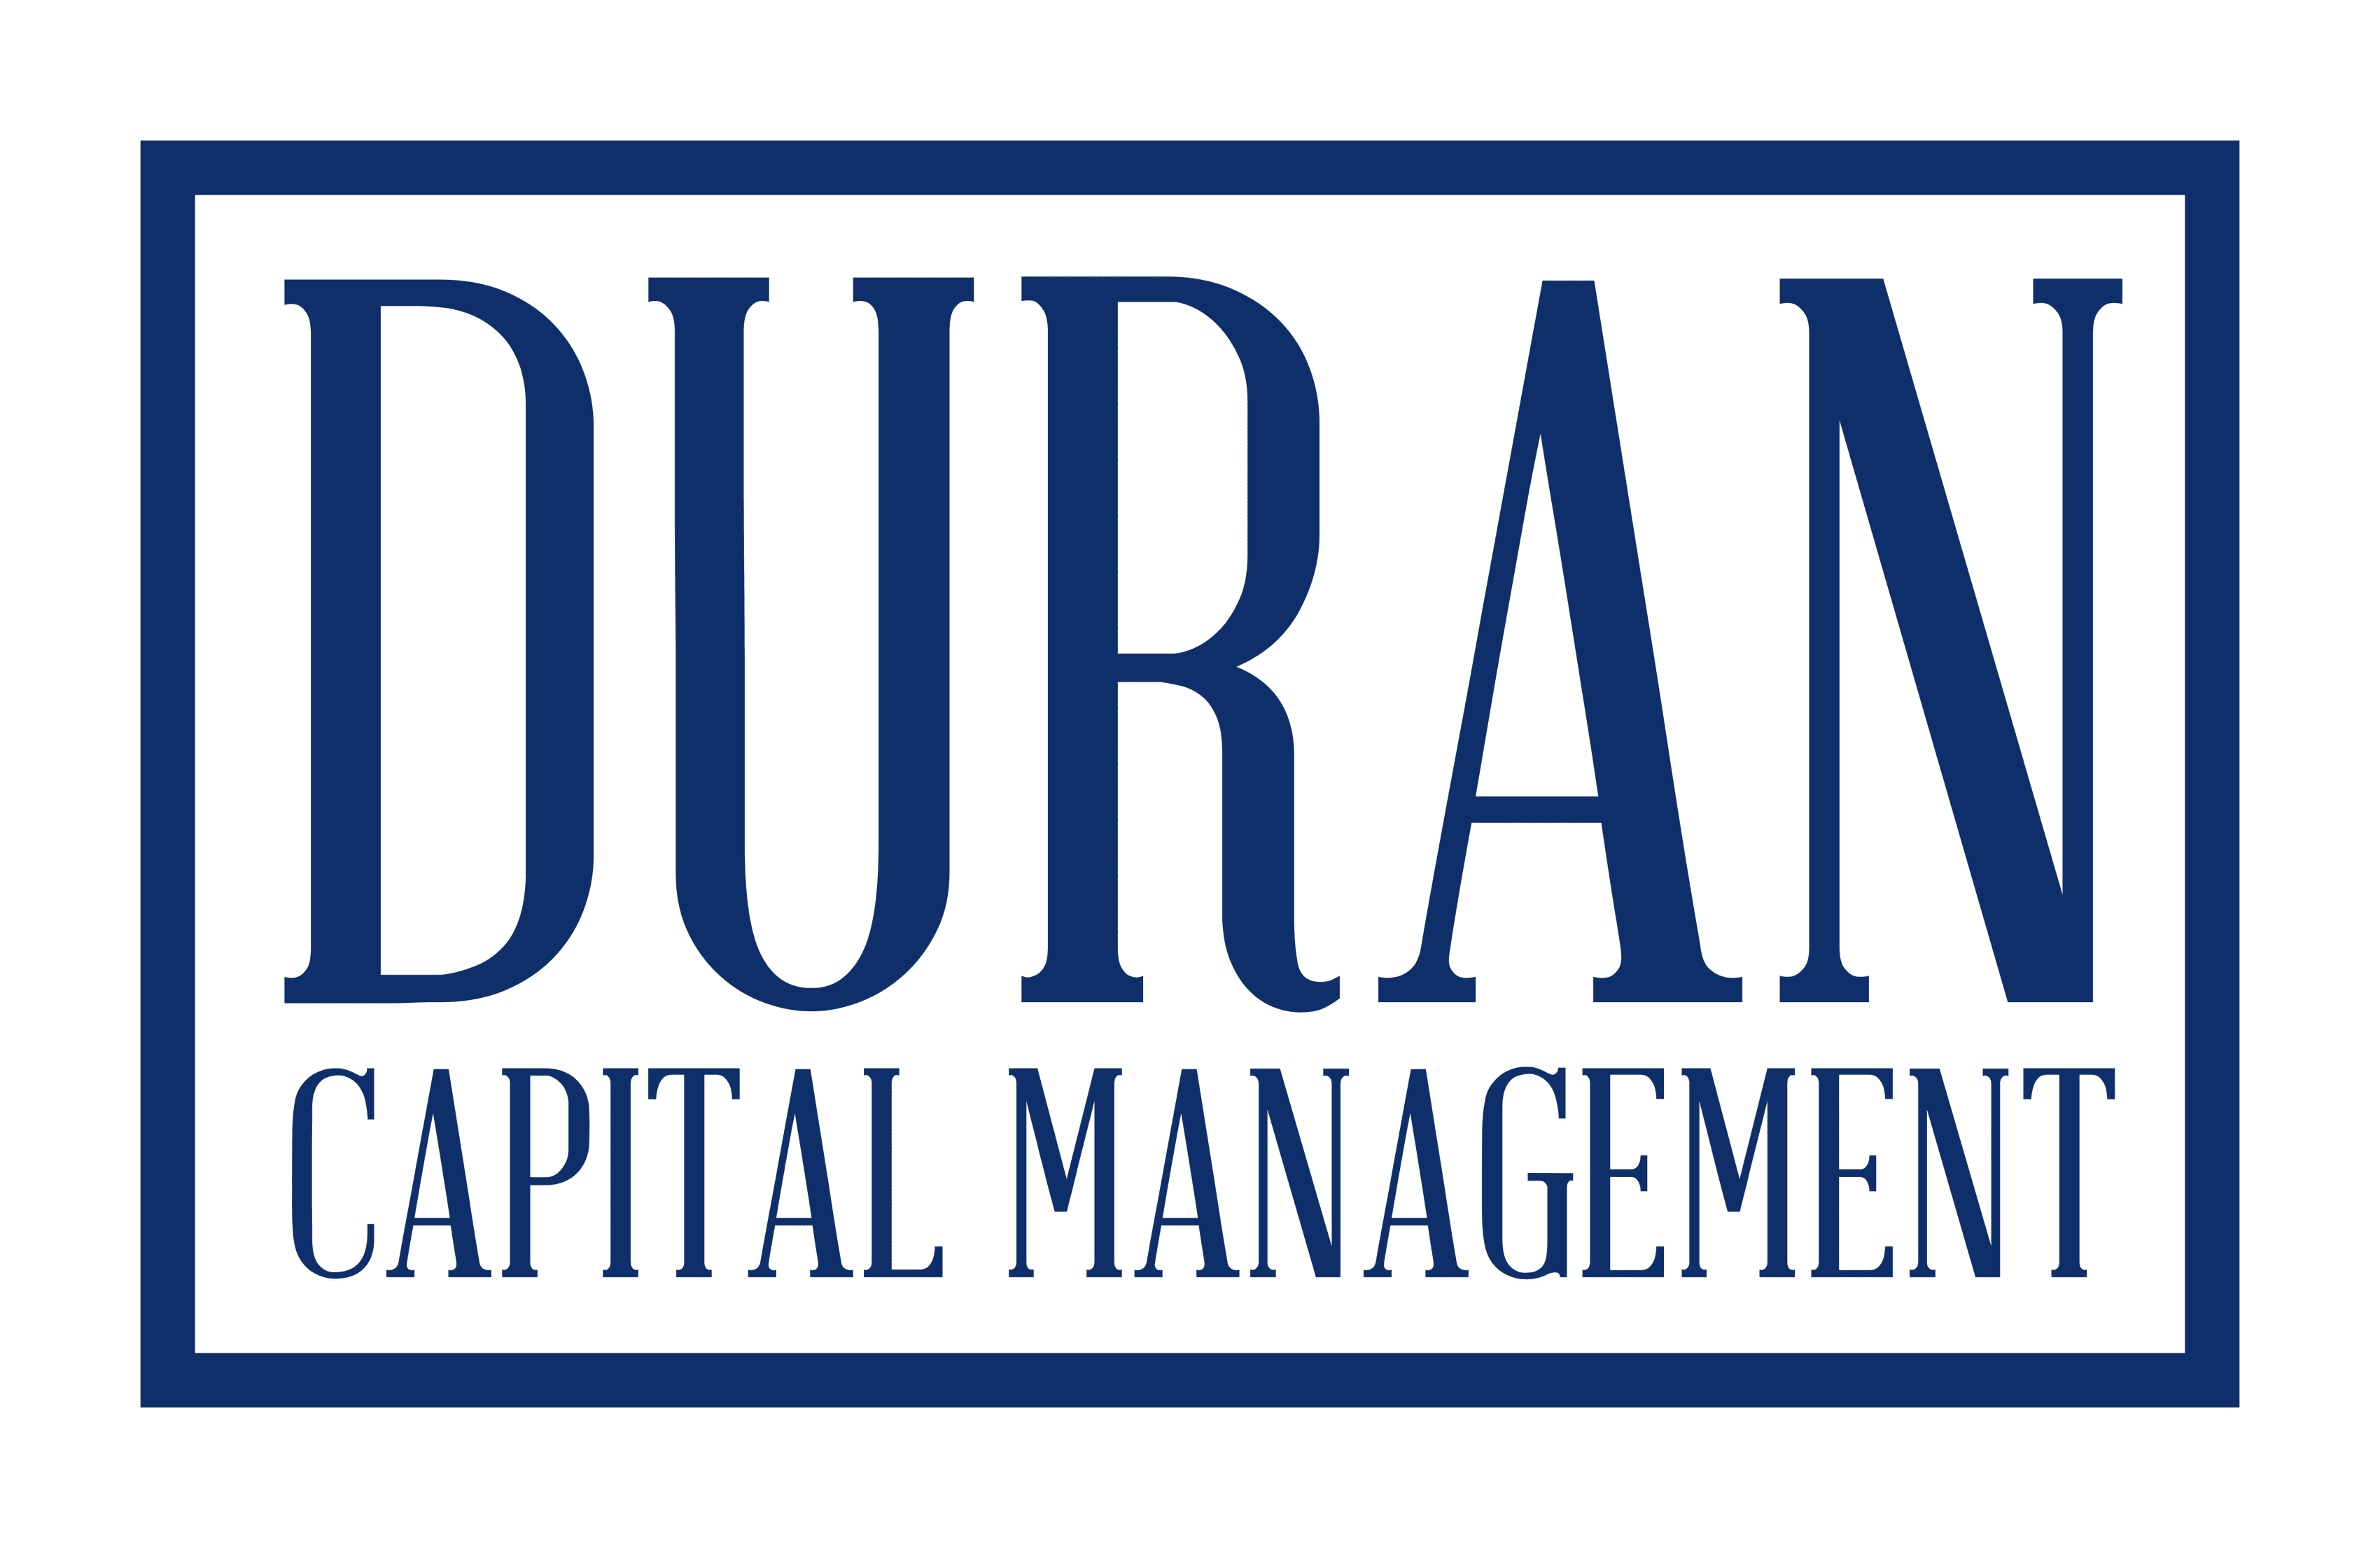 Duran Capital Management logo